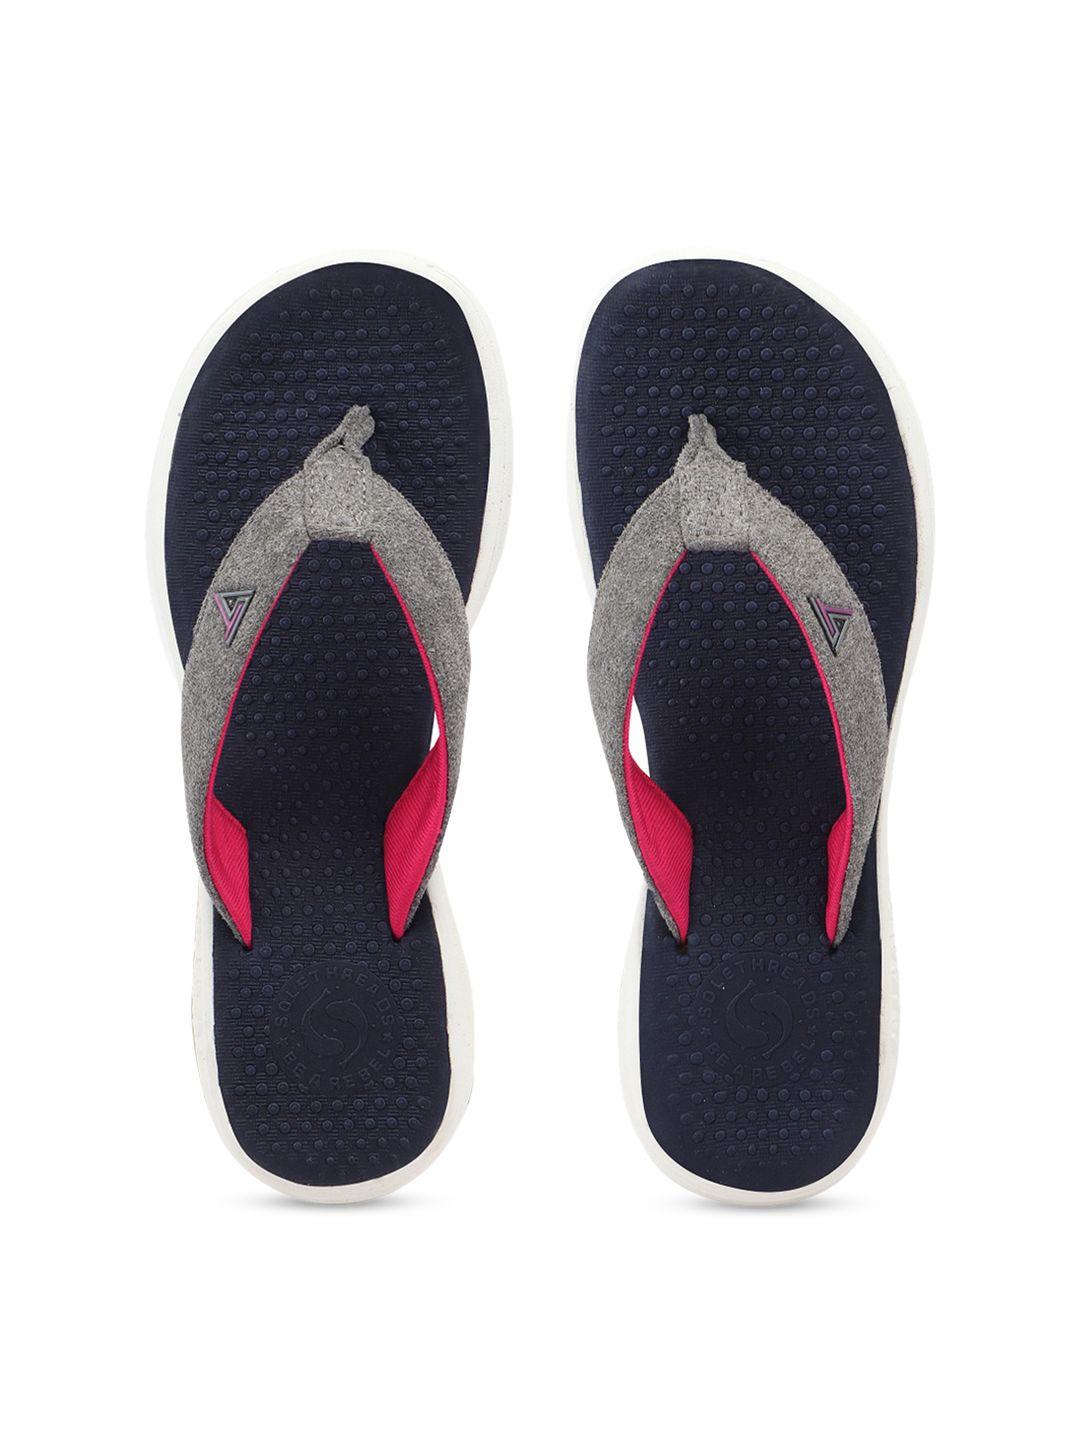 solethreads women navy blue & grey solid thong flip-flops